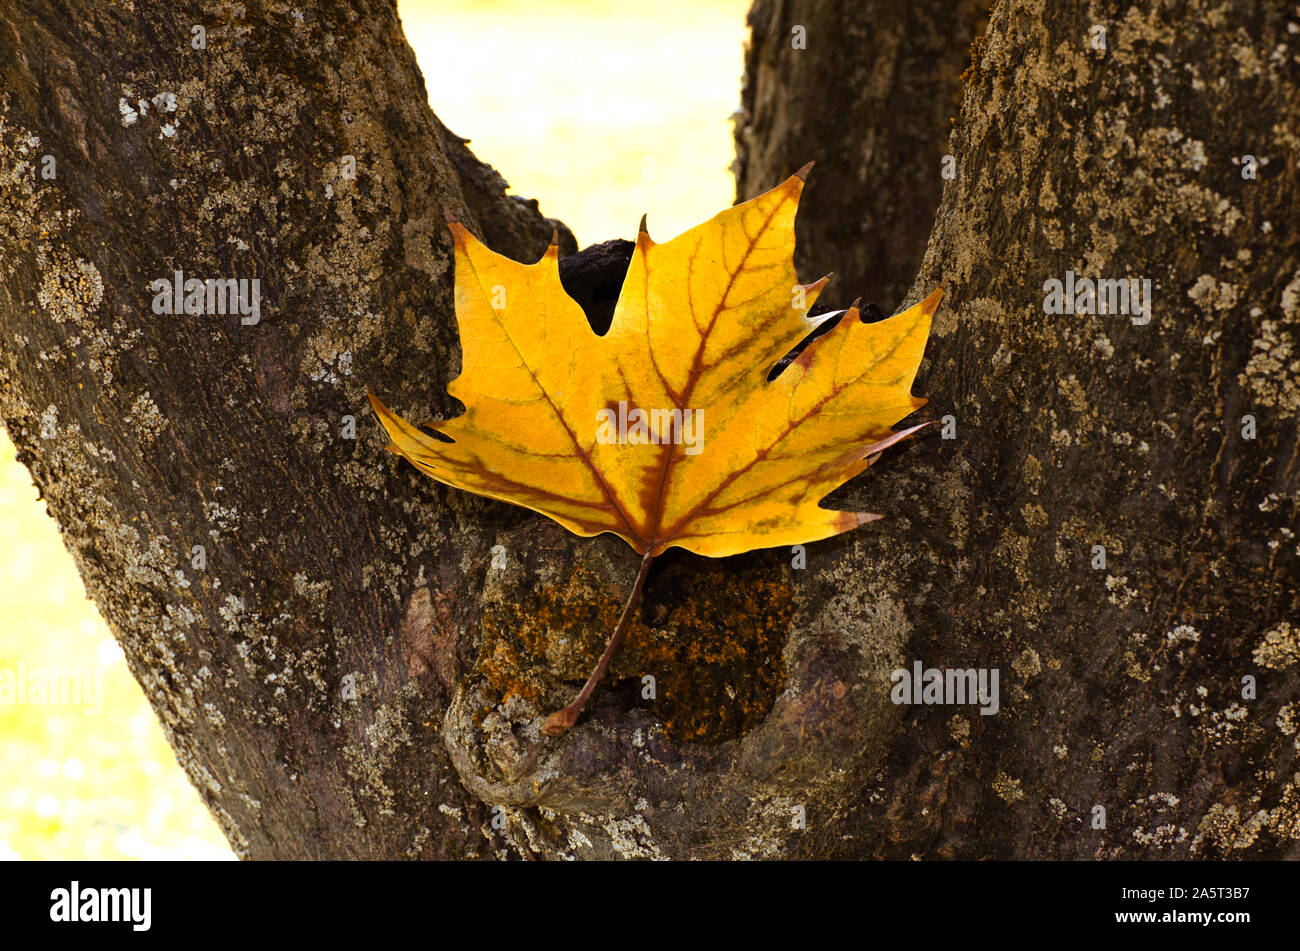 Platanus x hispanica gefallenen Blätter im Herbst. Oromana Park, Alcalá de Guadaira, Sevilla, Spanien. Stockfoto